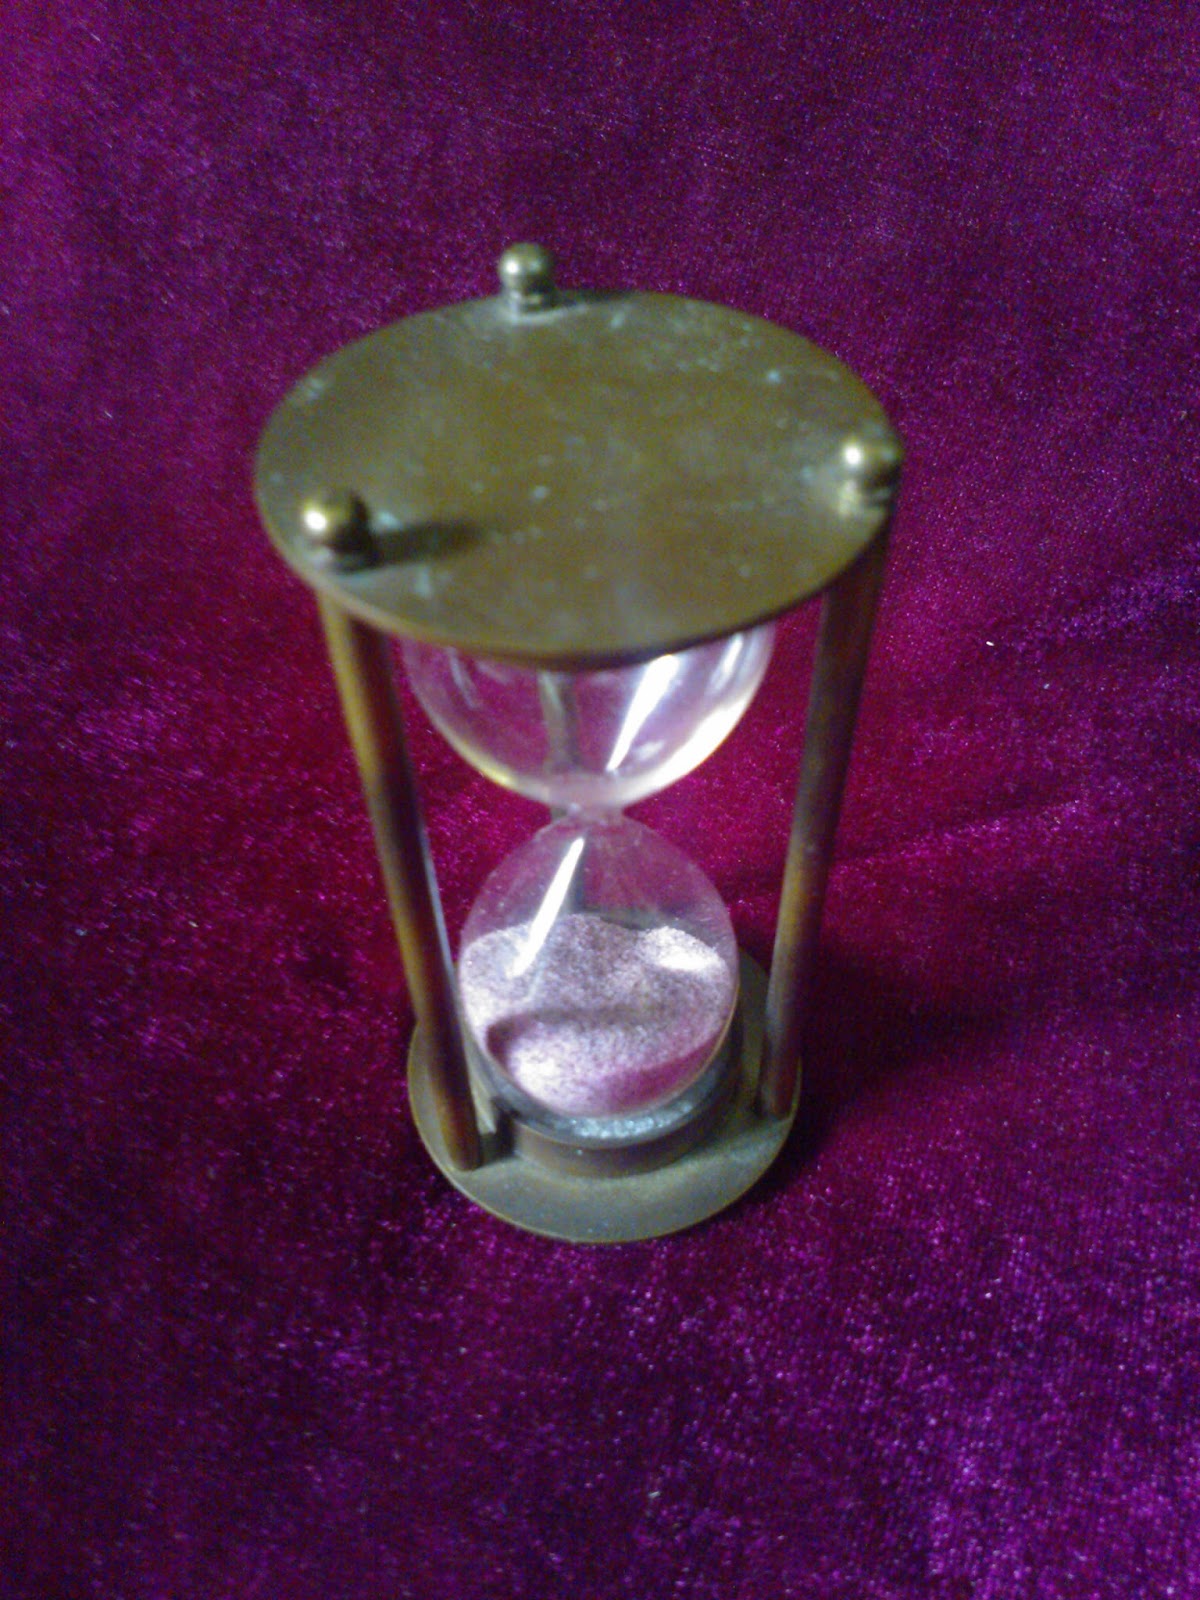 Grandpa's Treasure: Brass Royal Navy London 1920 Lantern